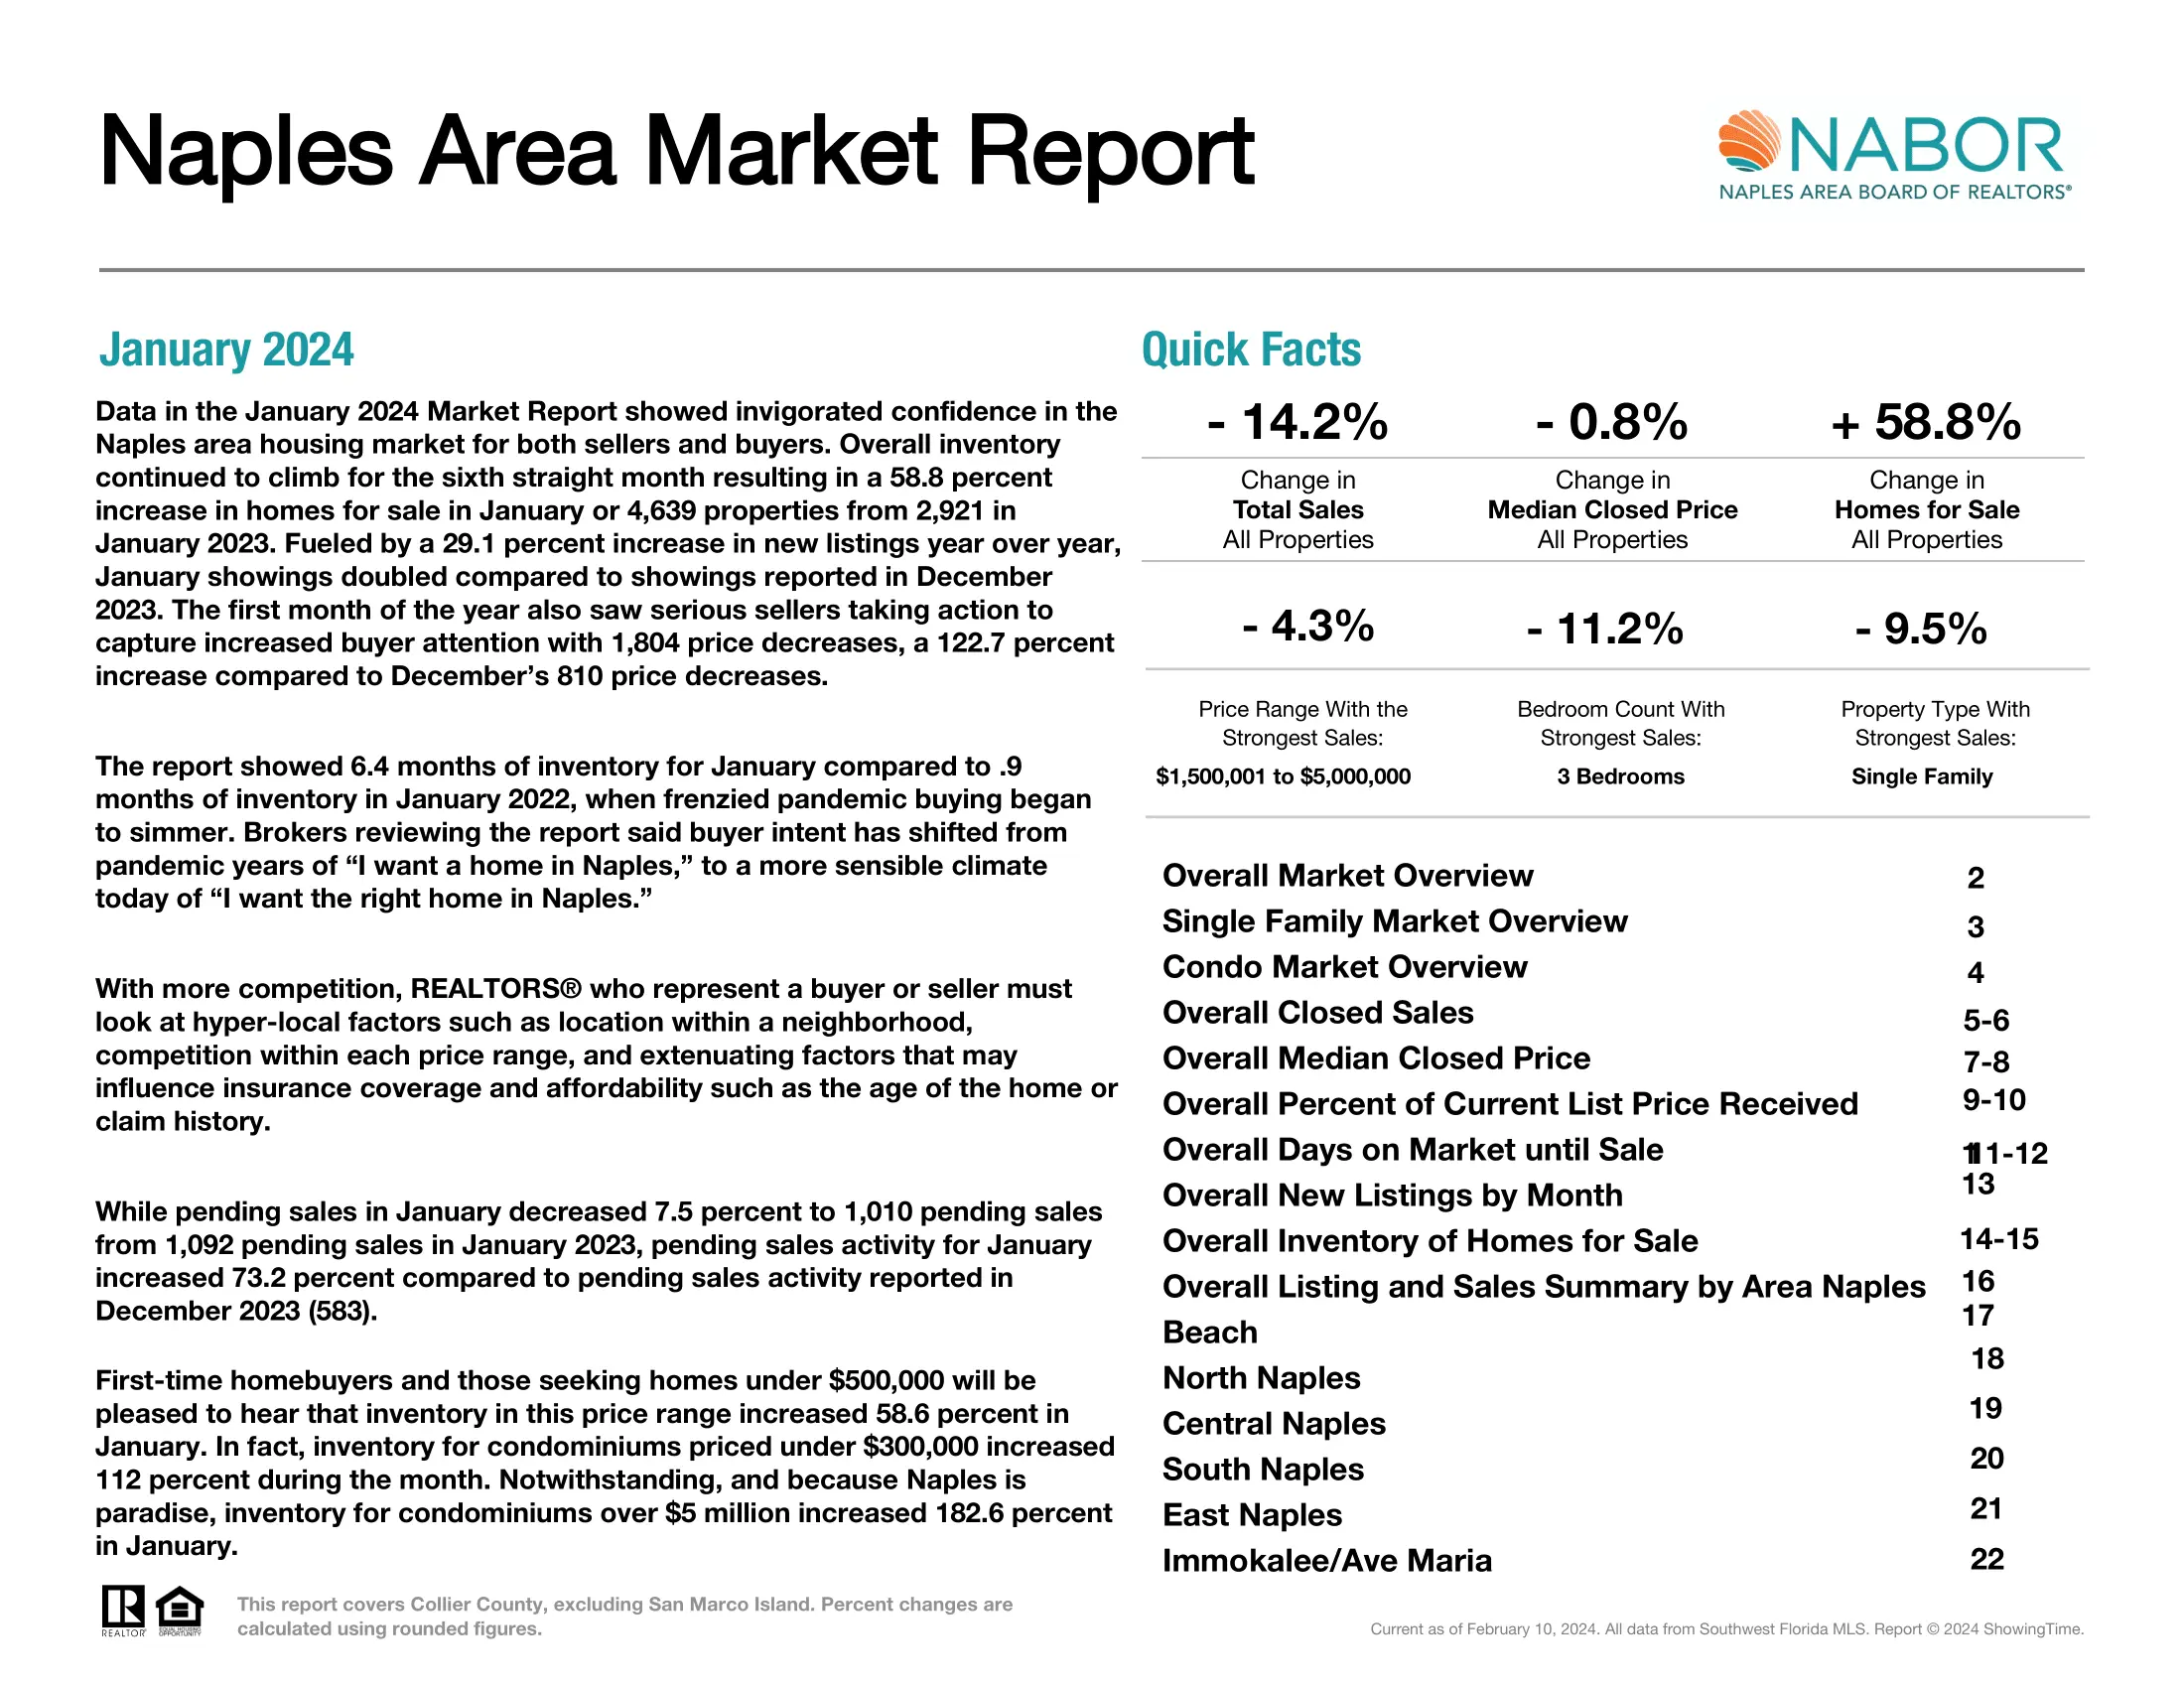 Naples Area Market Report - January